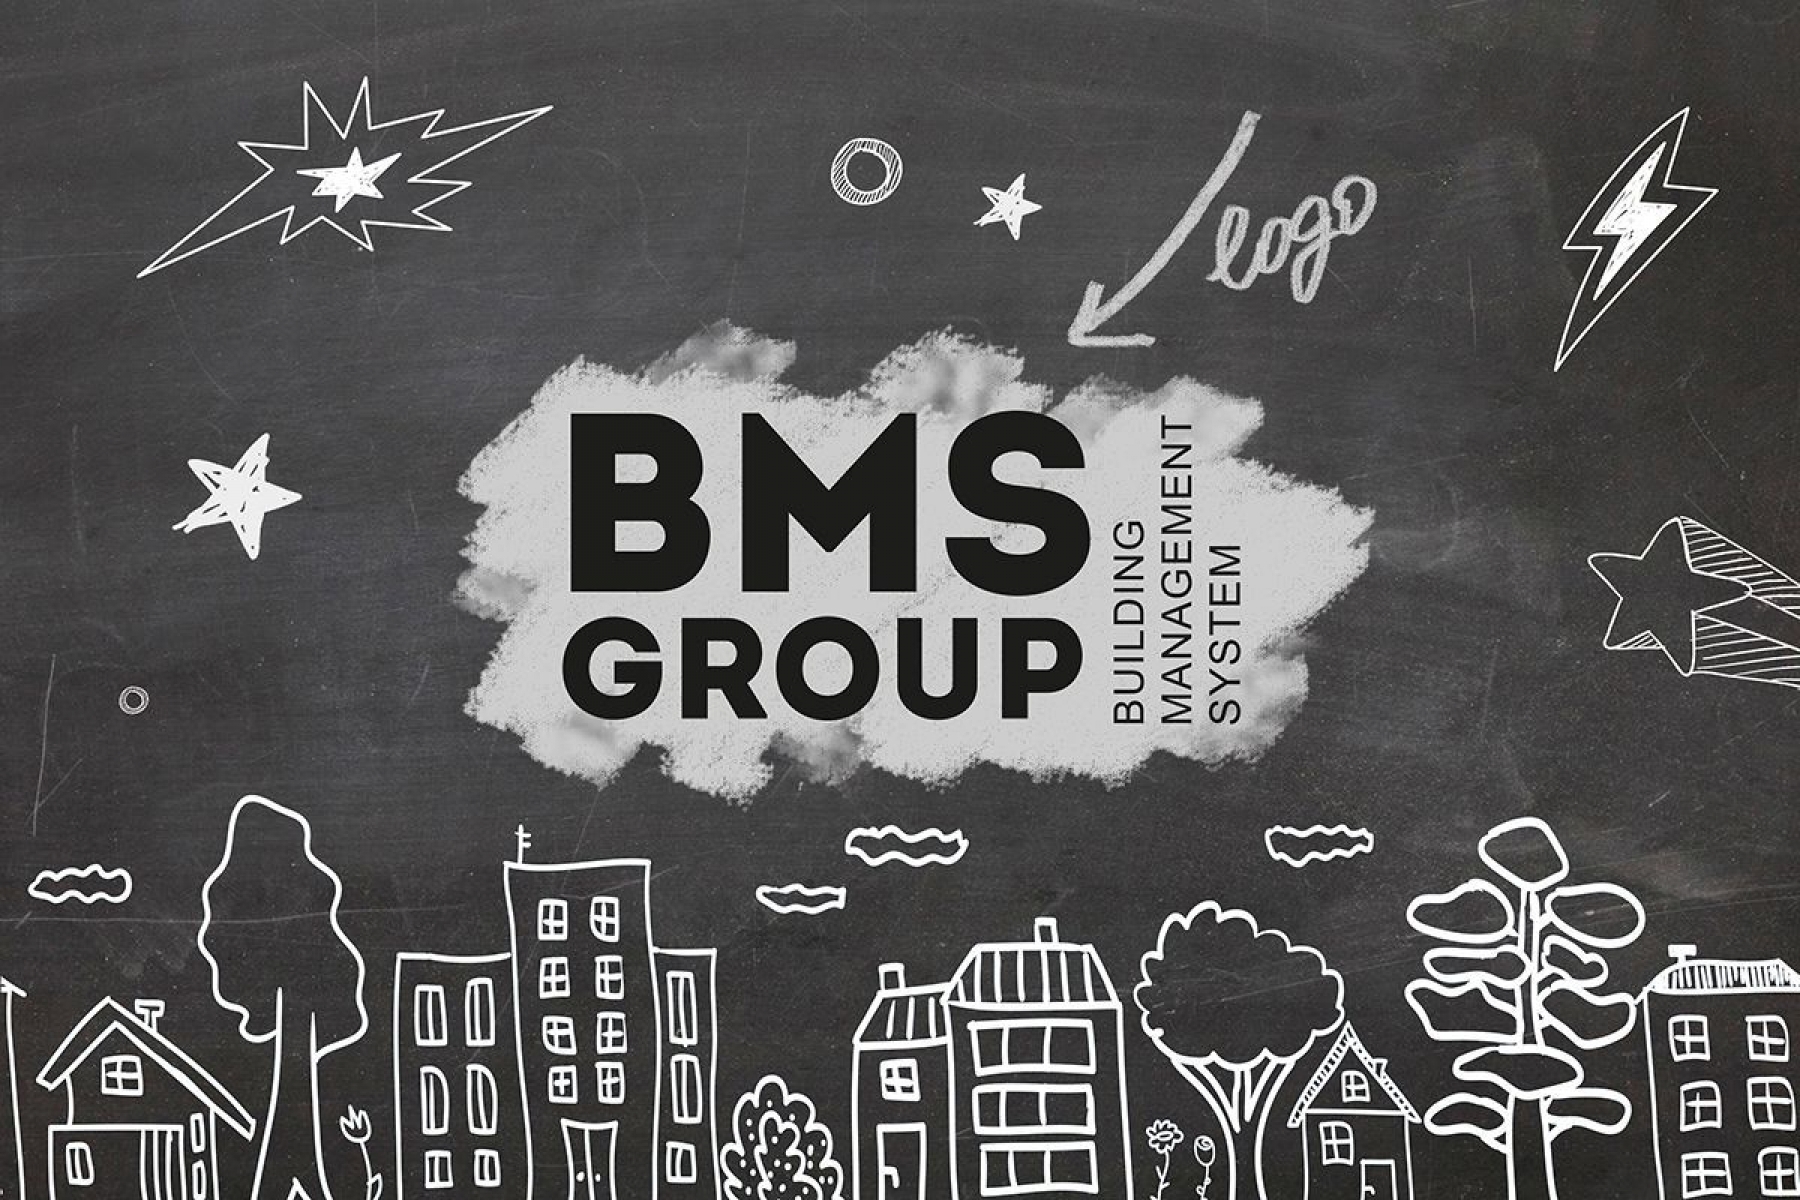 Разработка логотипа и фирменного стиля компании "BMS Group"